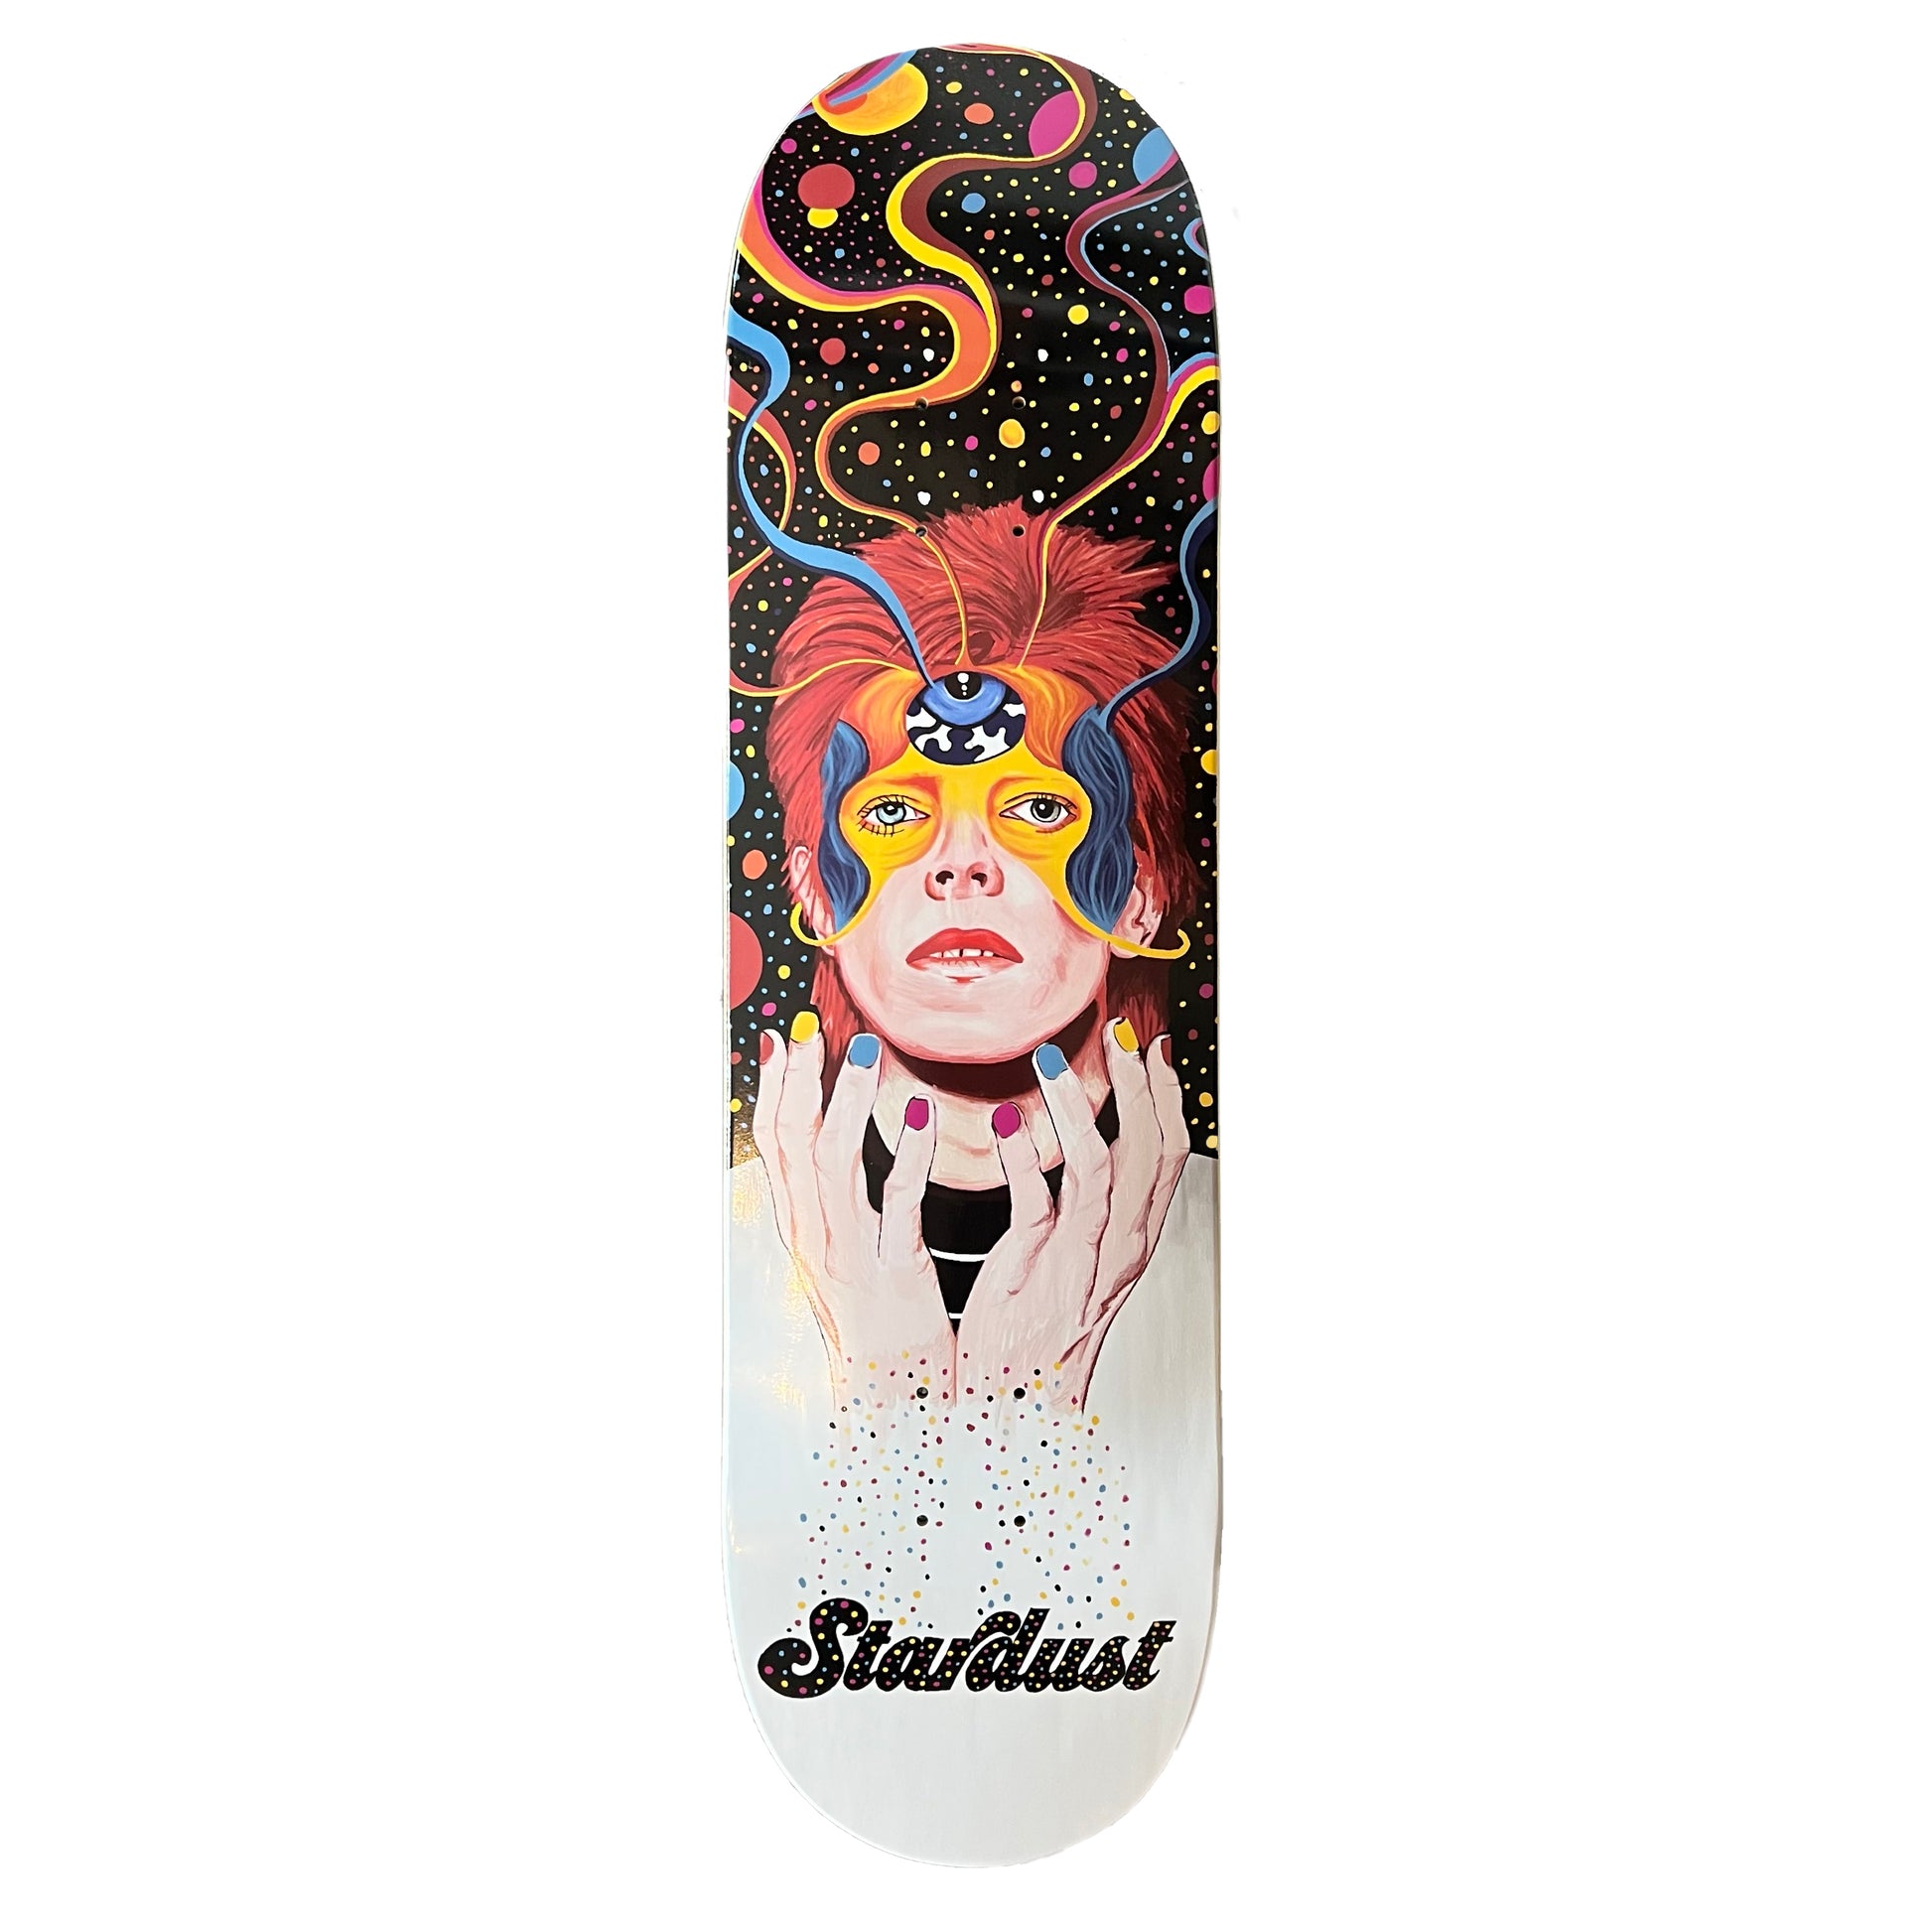 Stardust Skate Shop "Starman" Deck 002 By Jackson Davis